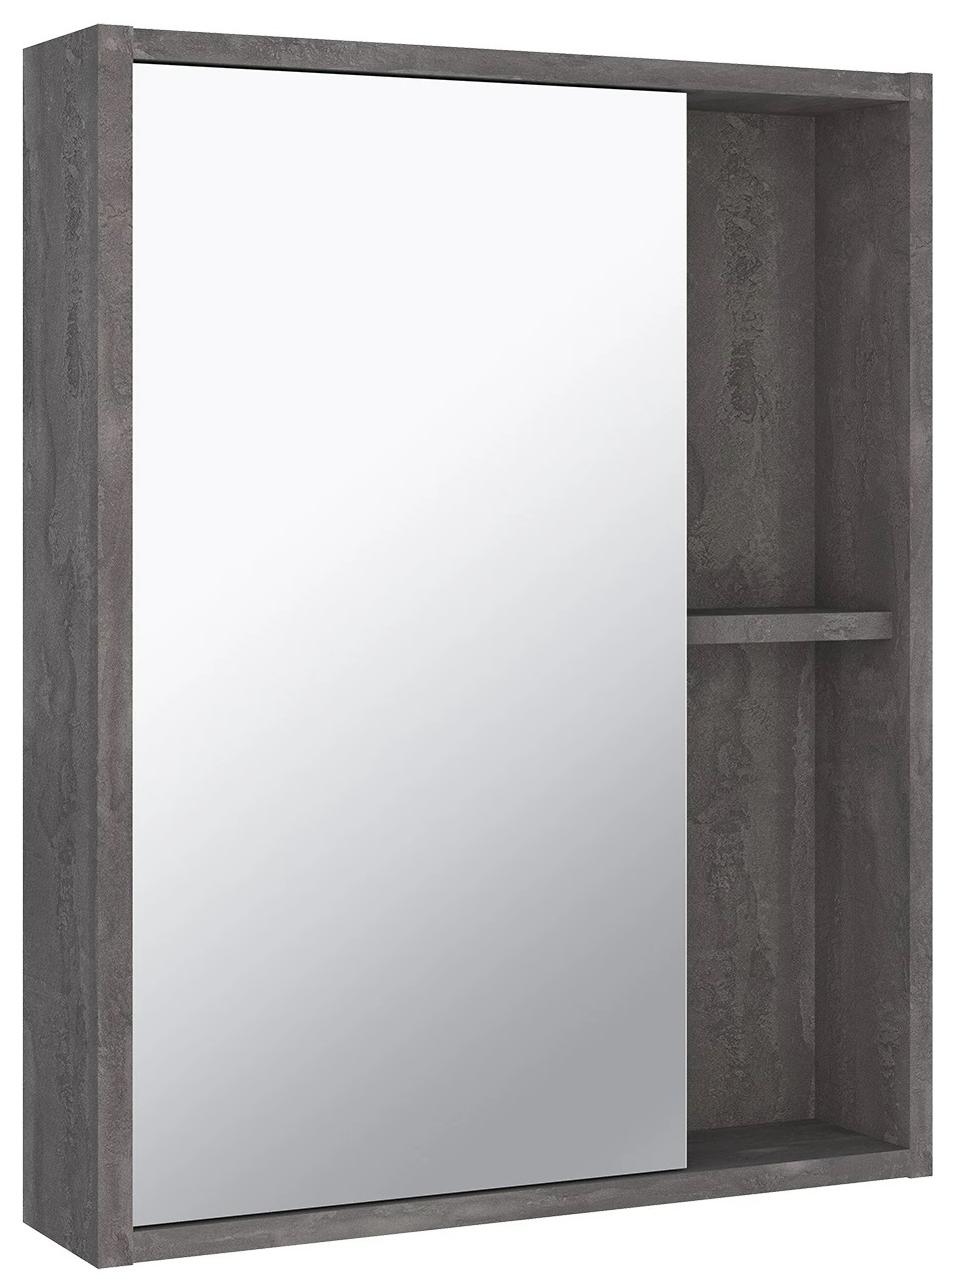 Зеркальный шкаф Руно Эко 52 см железный камень, 00-00001324